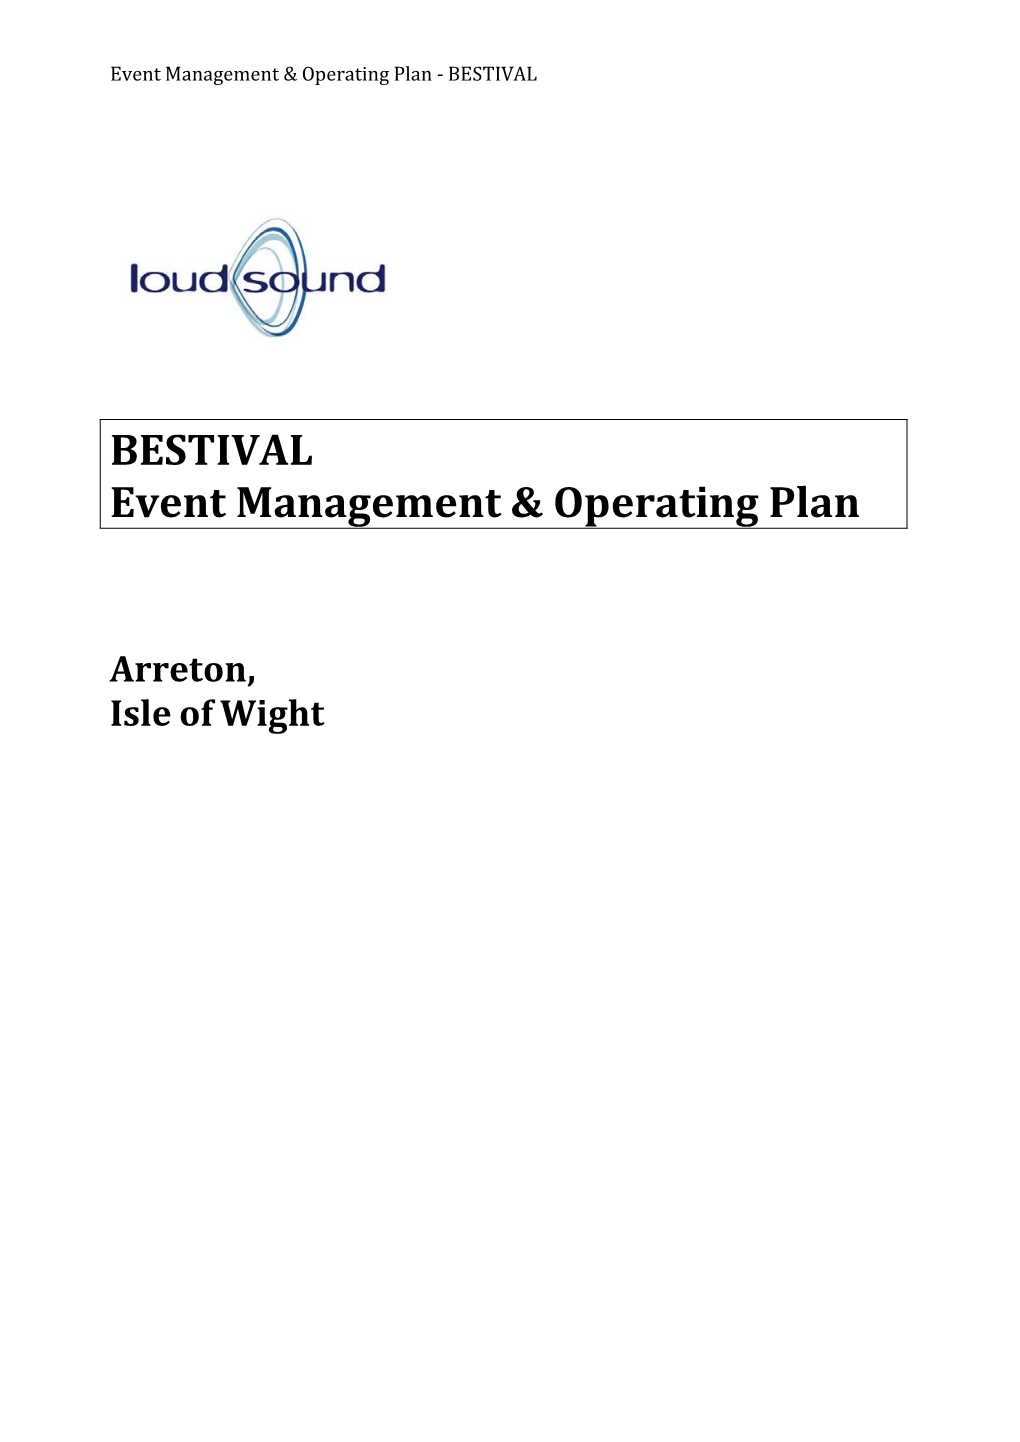 Event Management Plan